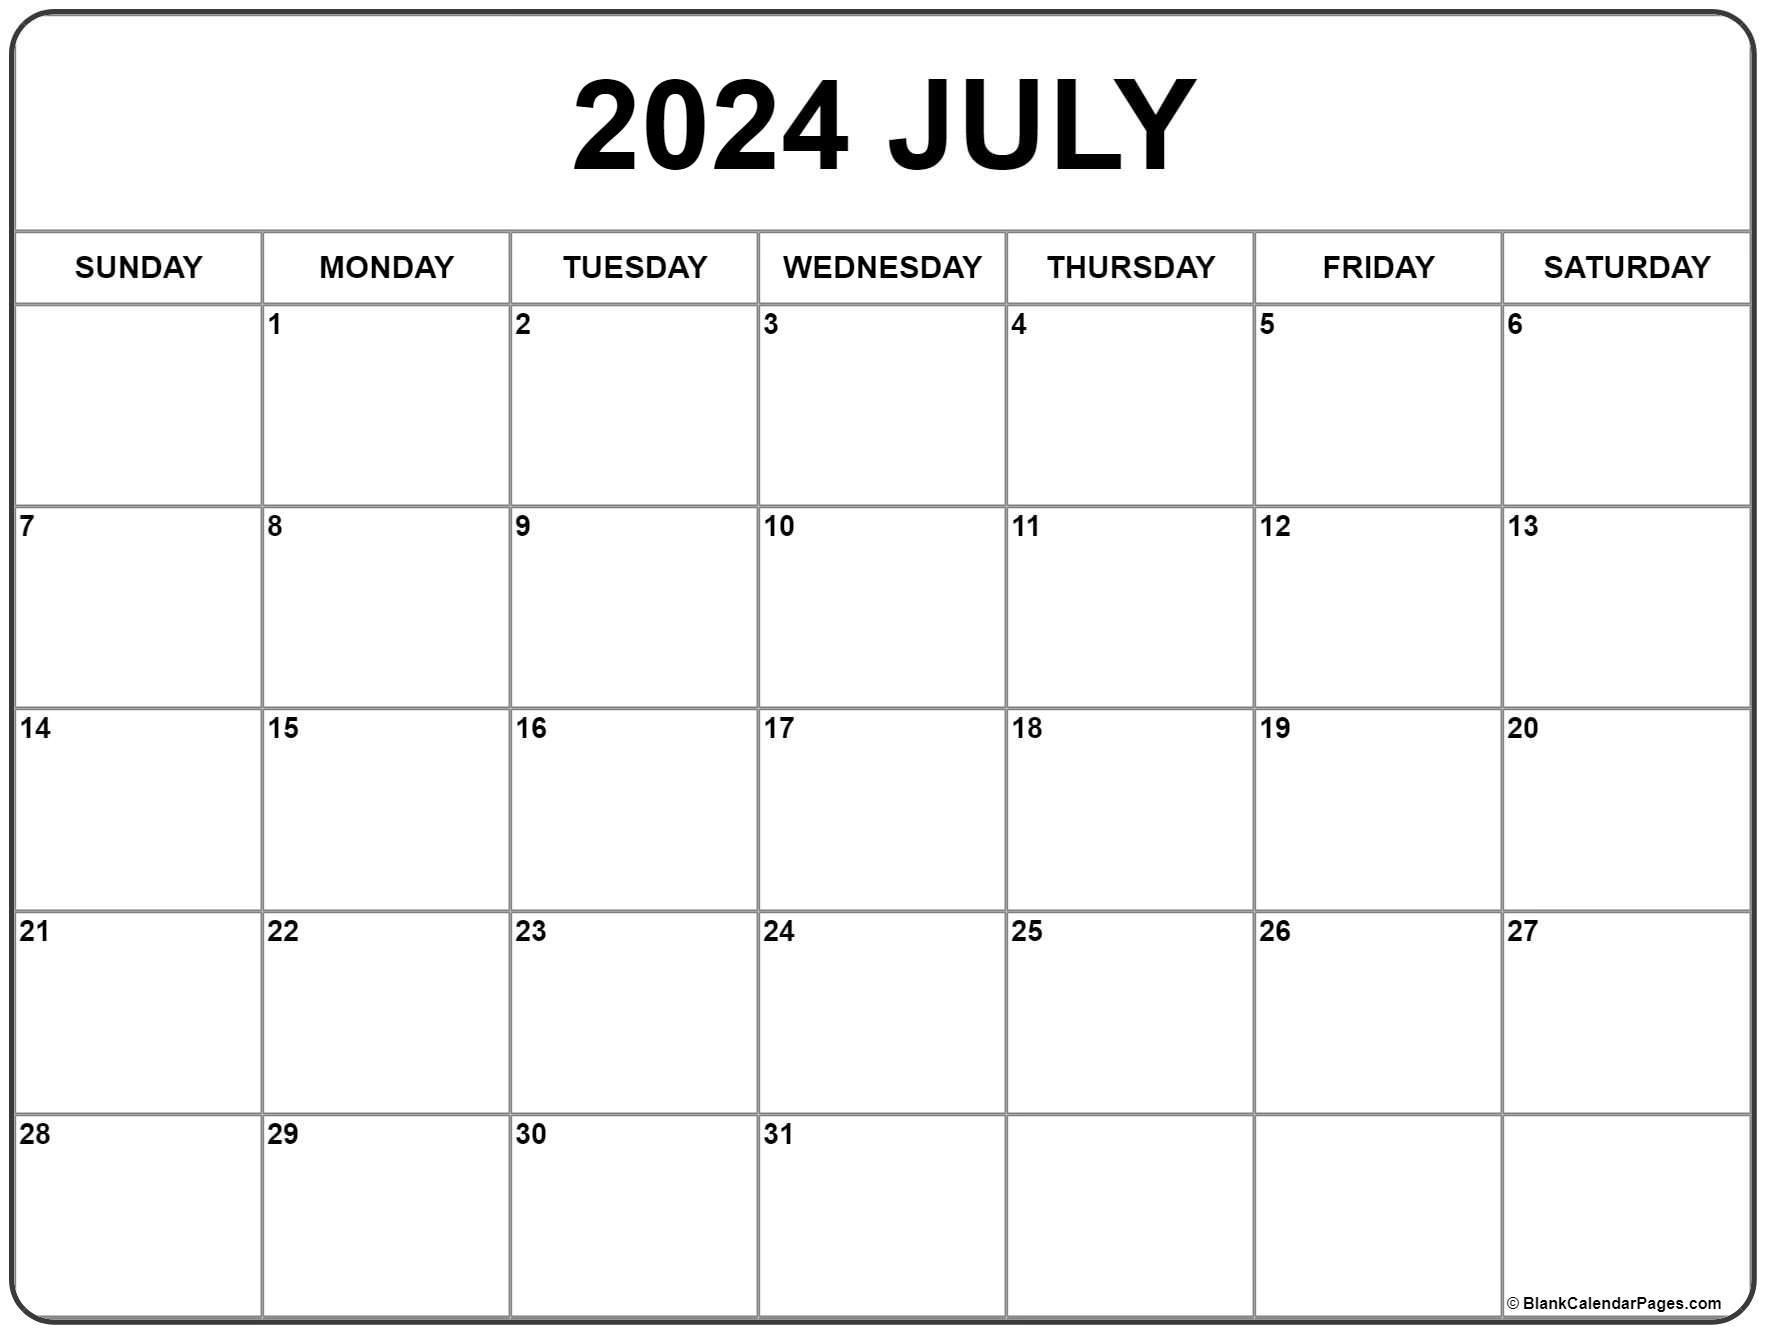 July 2024 Calendar | Free Printable Calendar inside Free Printable July 2024 Calendar Pdf